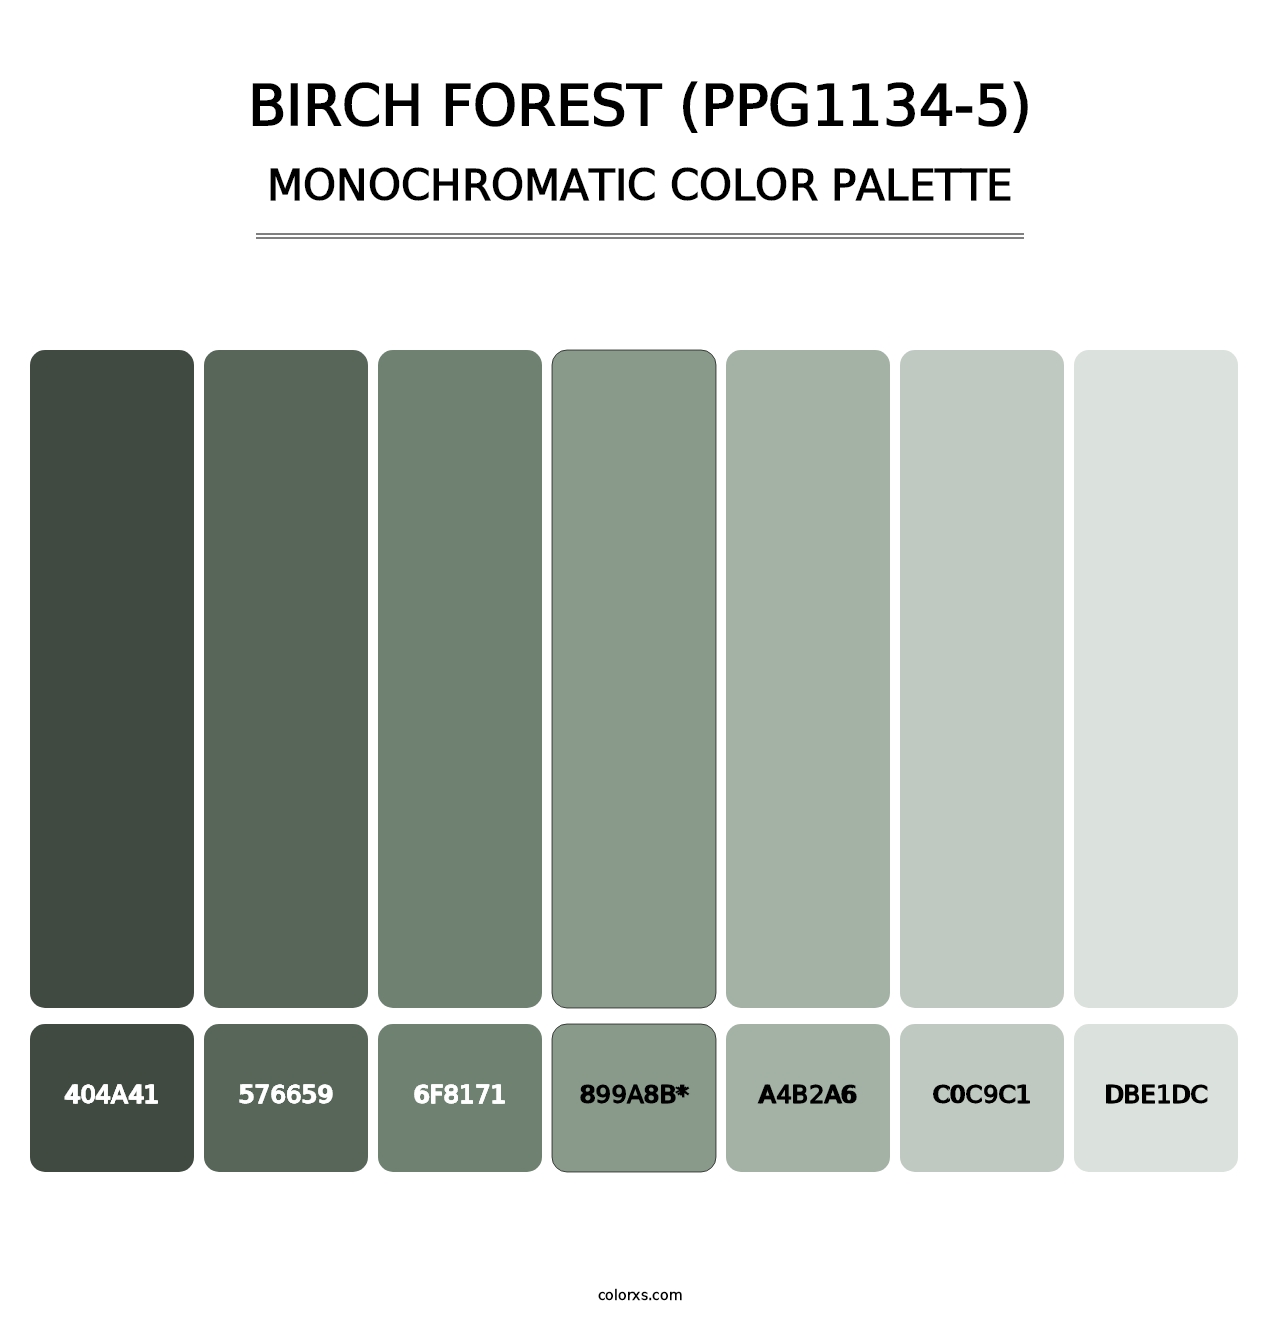 Birch Forest (PPG1134-5) - Monochromatic Color Palette